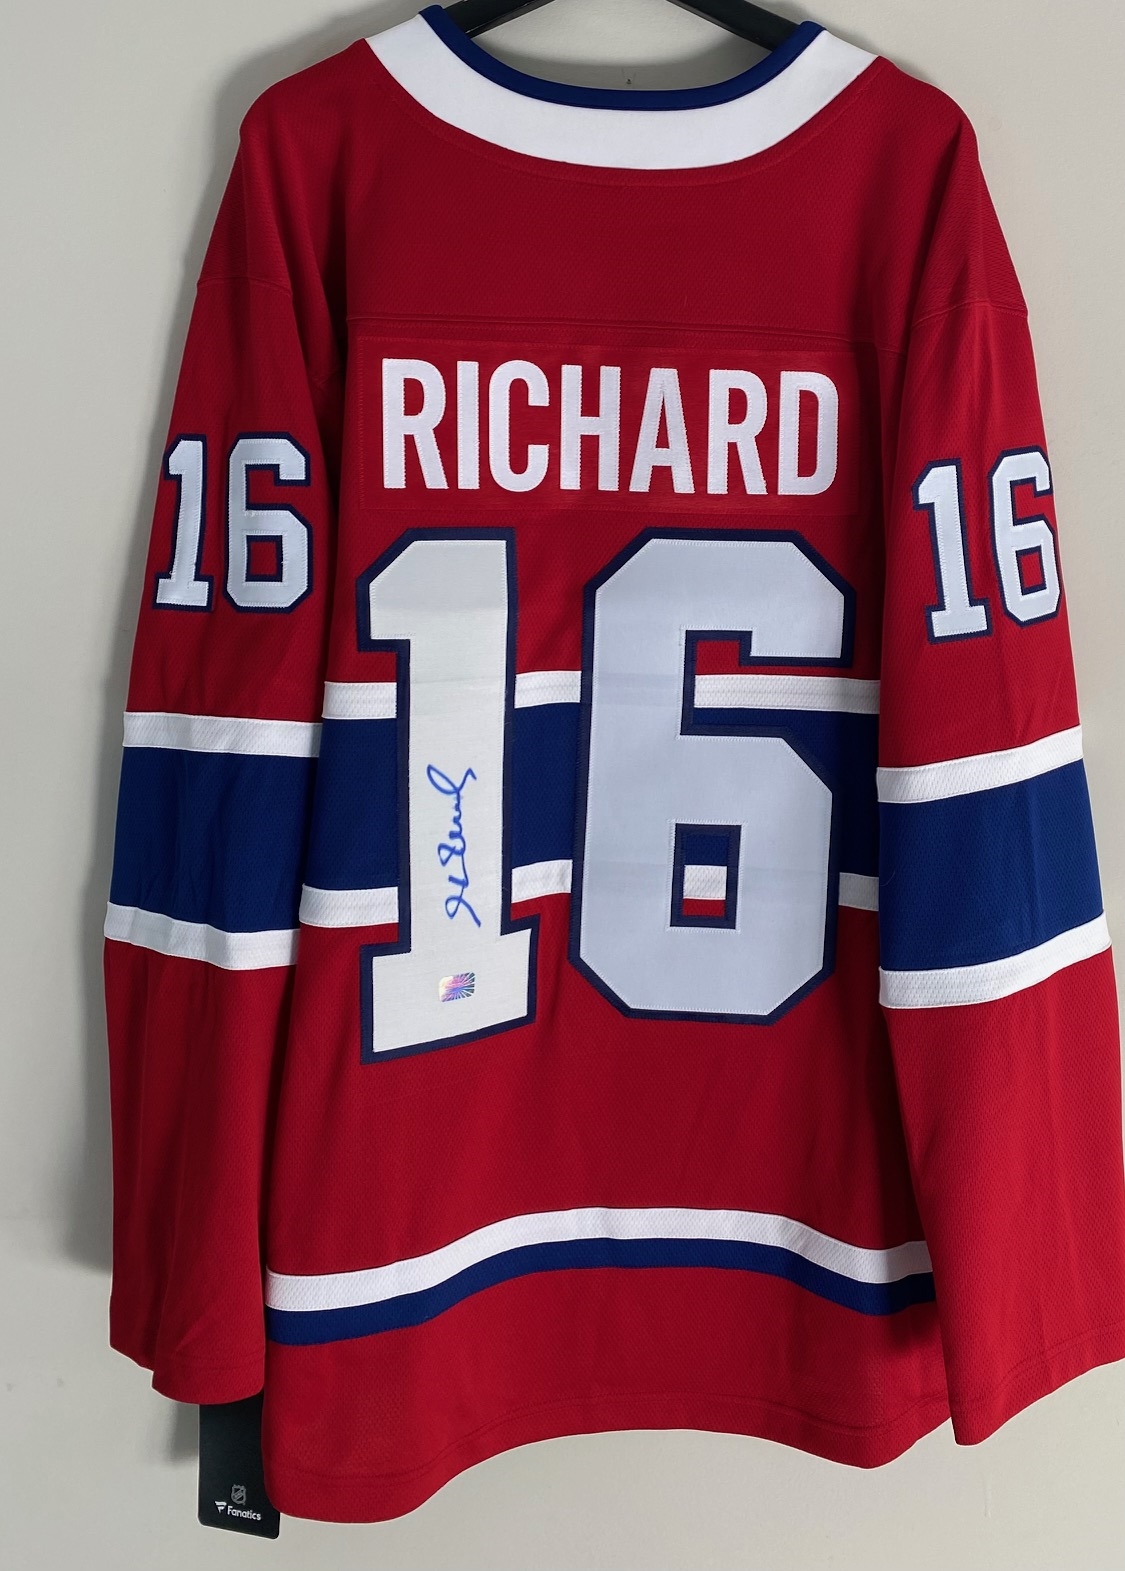 Henri Richard Montreal Canadiens Signed Fanatics Jersey